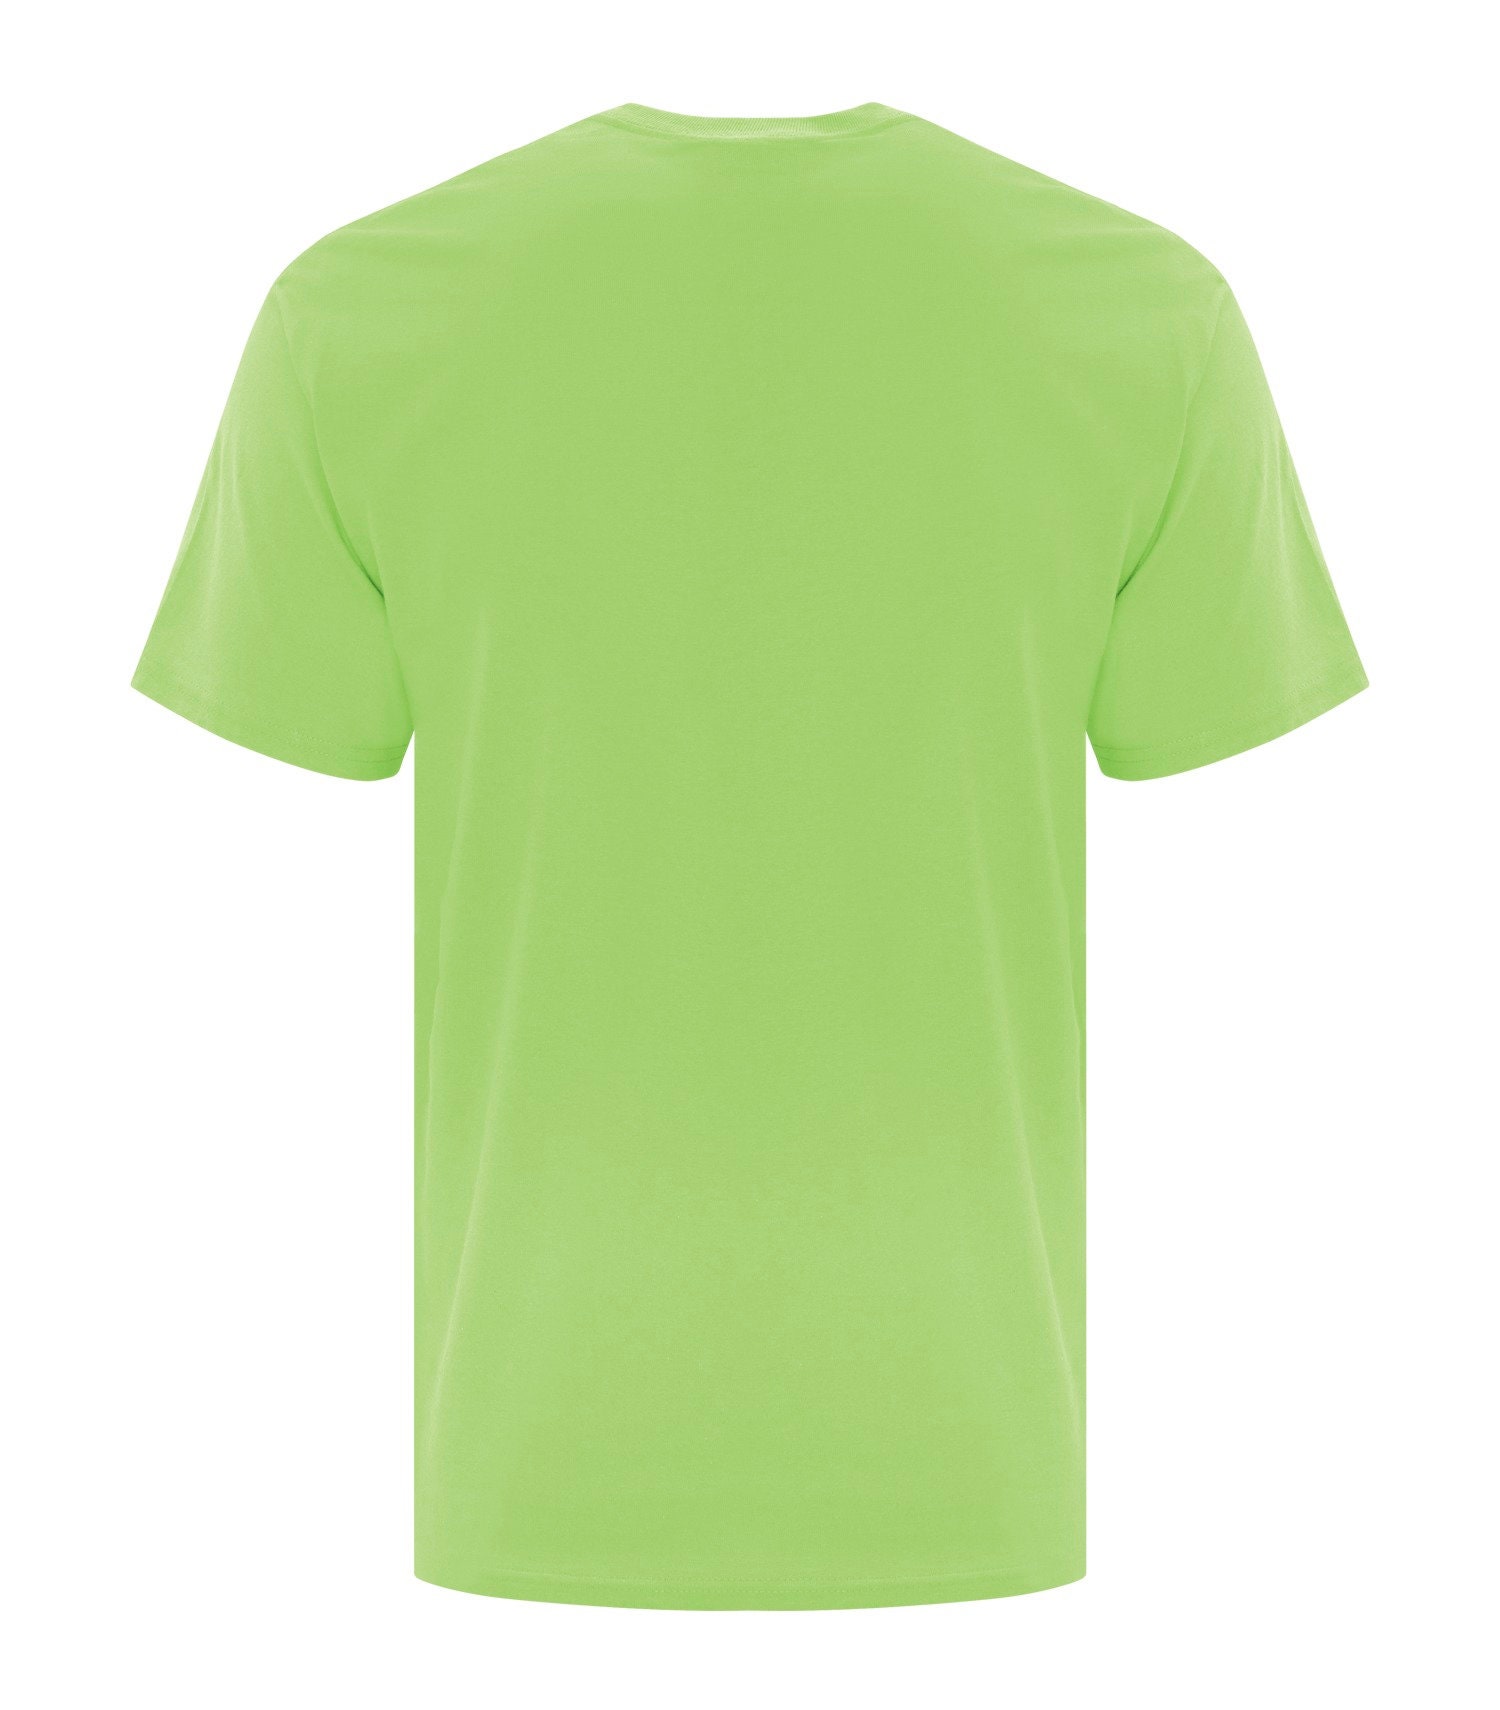 Lime T-Shirt Cotton T-Shirts Plain Lime T-Shirt Simple | Etsy